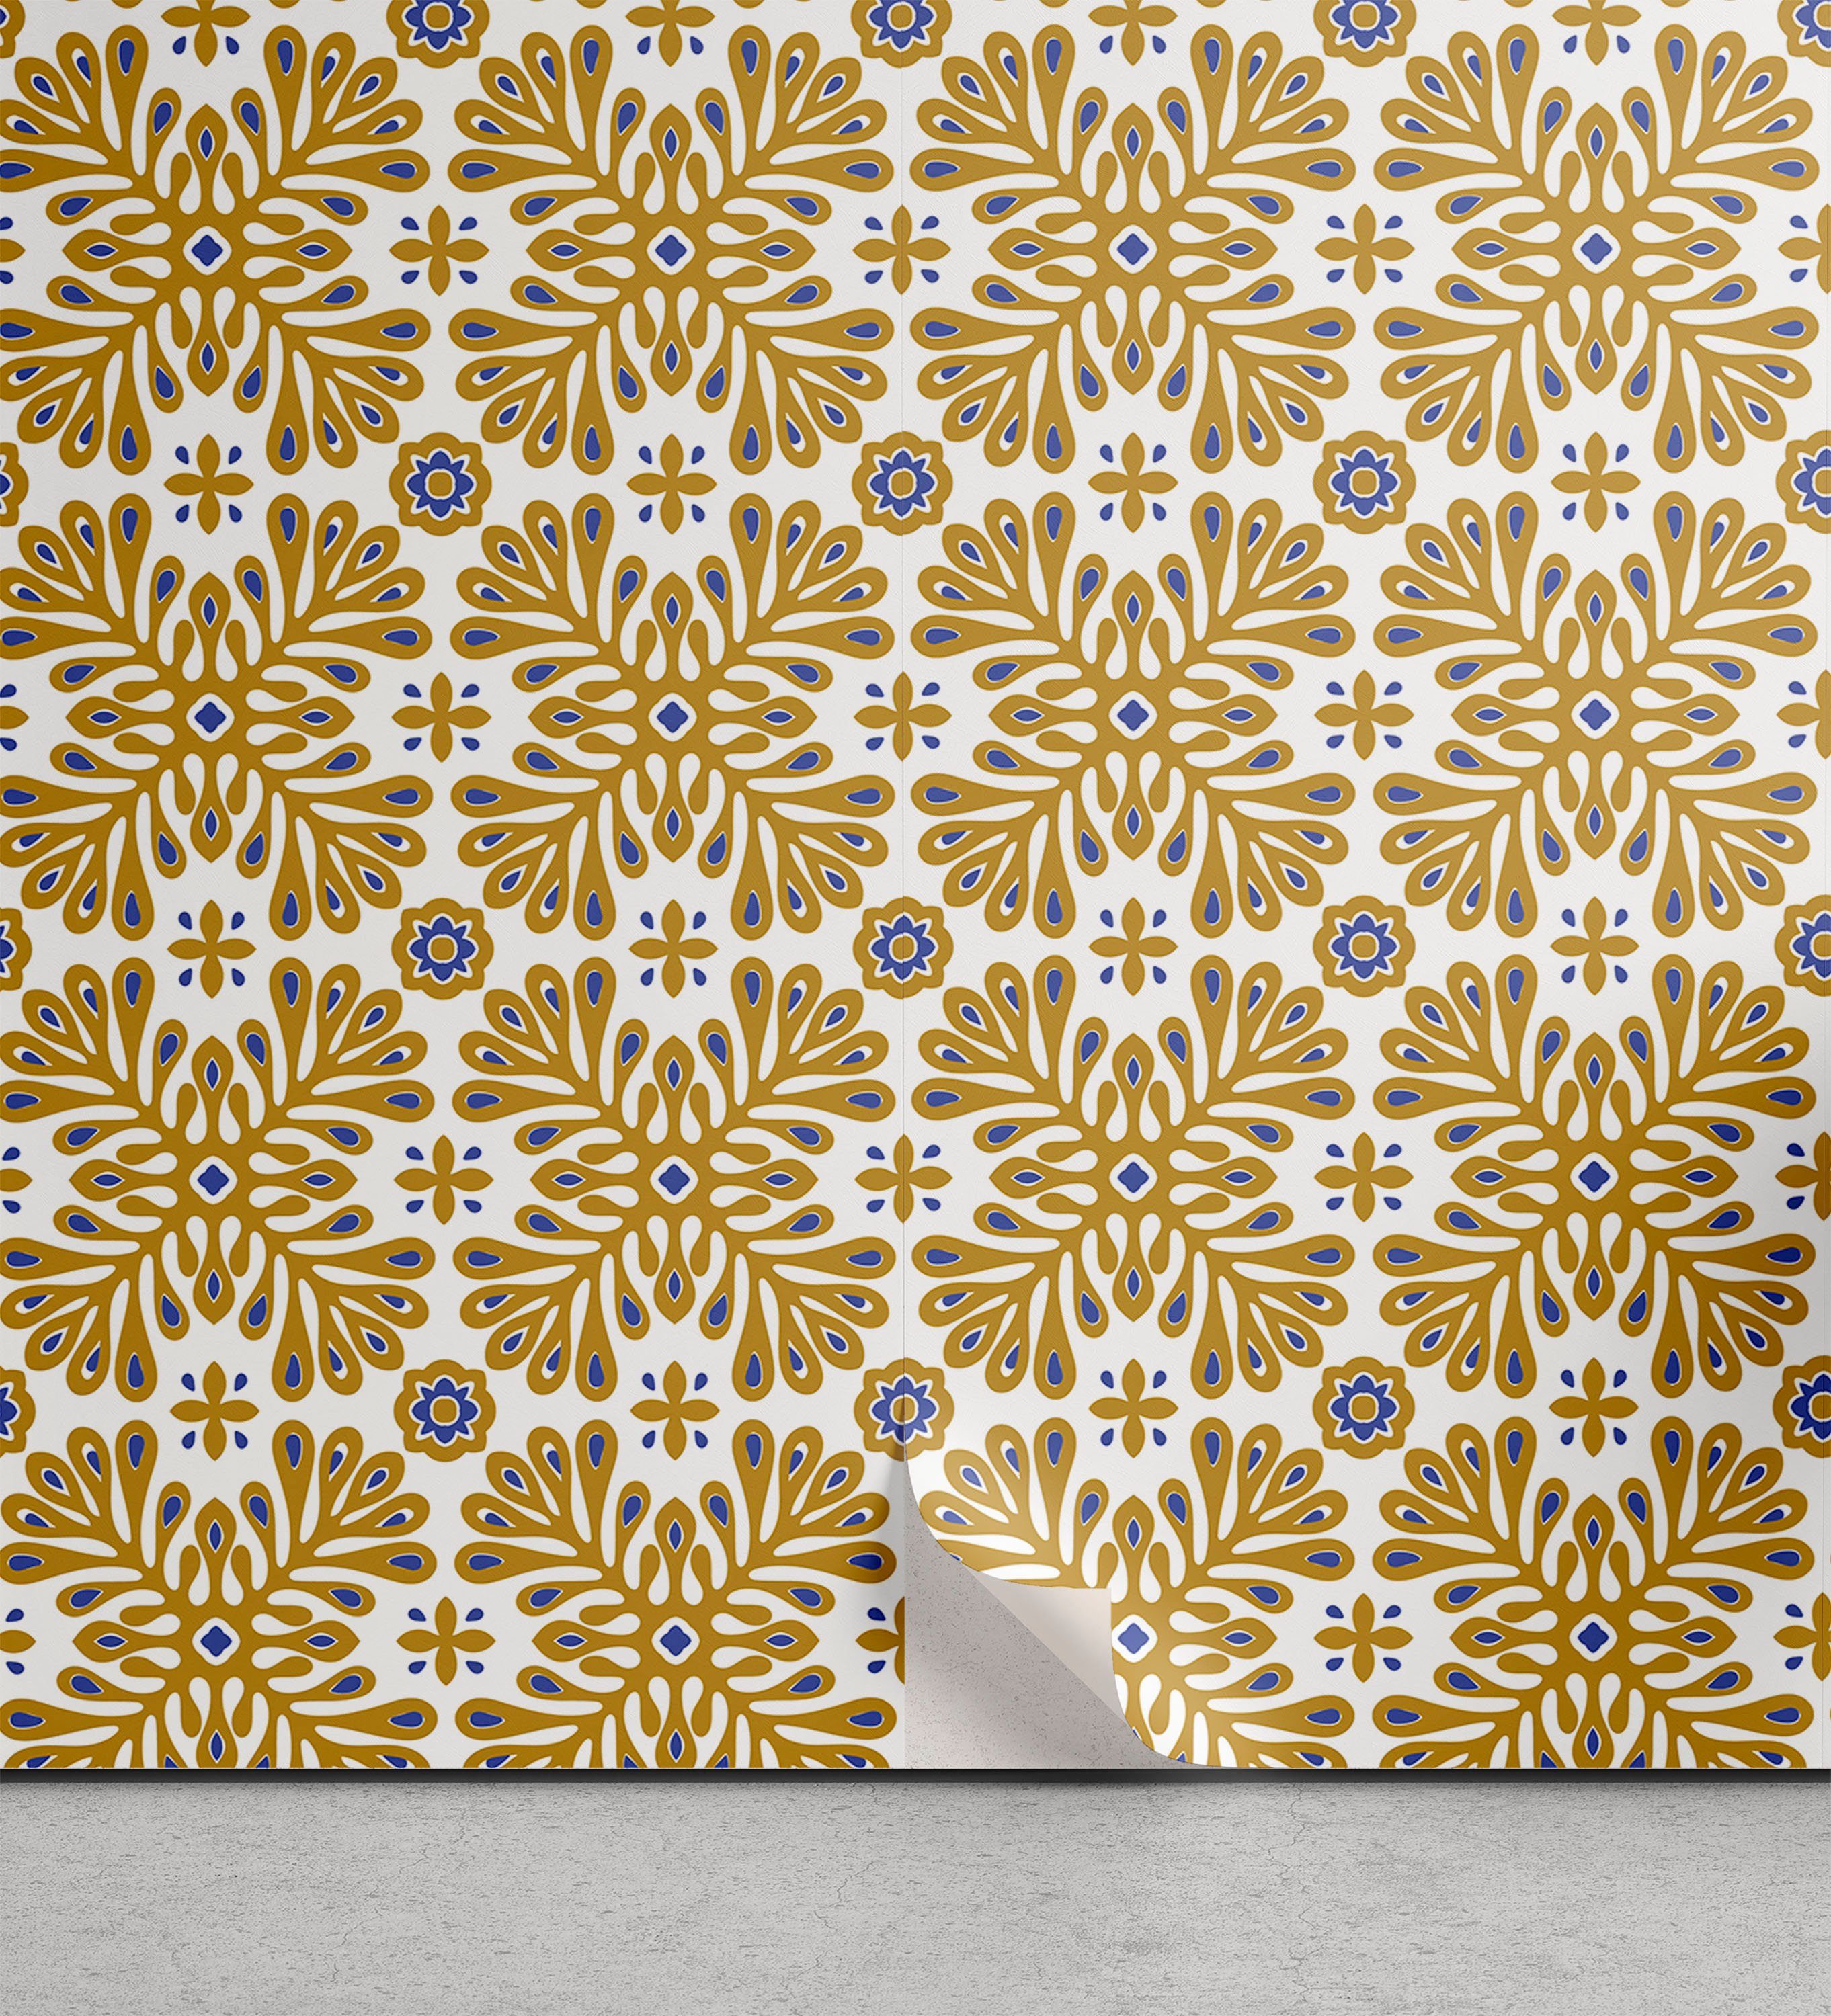 Abakuhaus Vinyltapete selbstklebendes Wohnzimmer Küchenakzent, marokkanisch Floral Inspired Mosaik